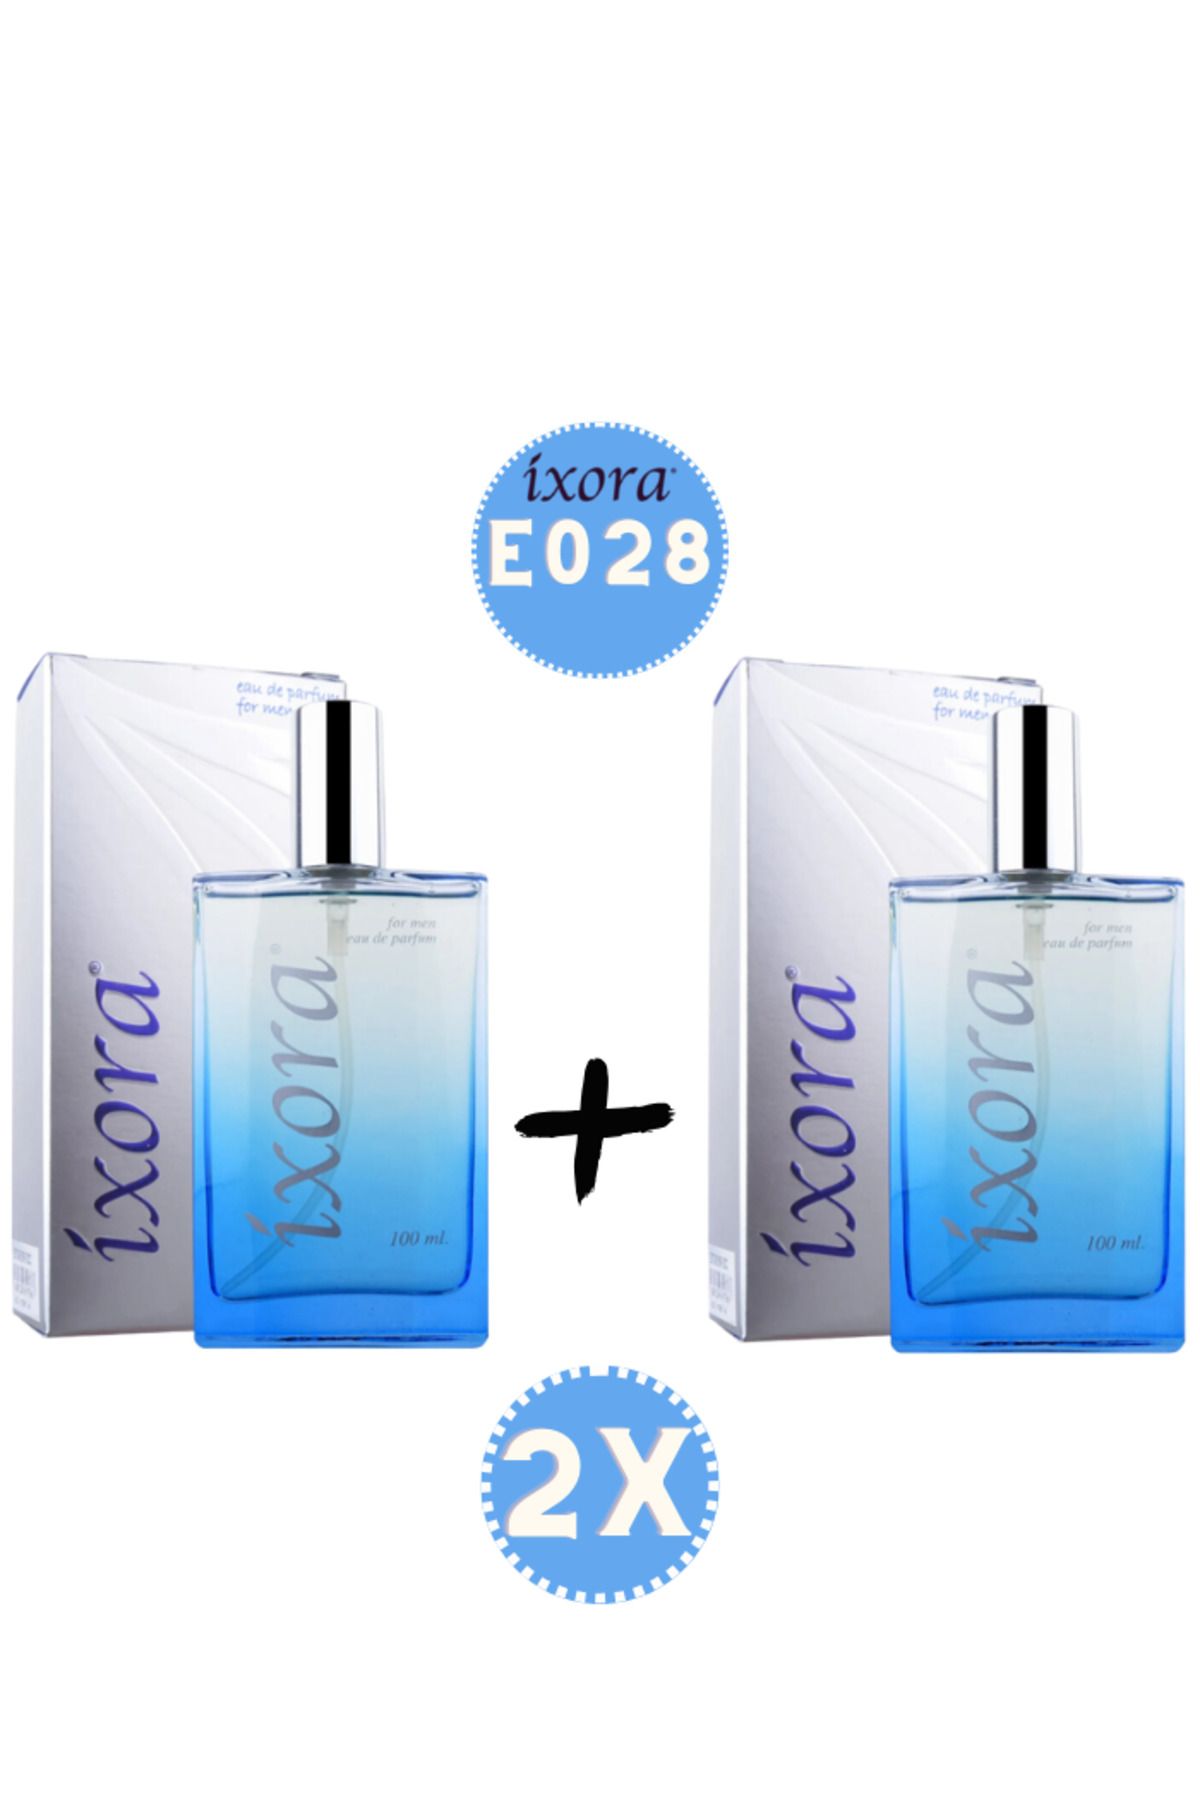 Ixora E028x2 (2 adet ) Erkek Parfüm Entrica 100 ml Edp